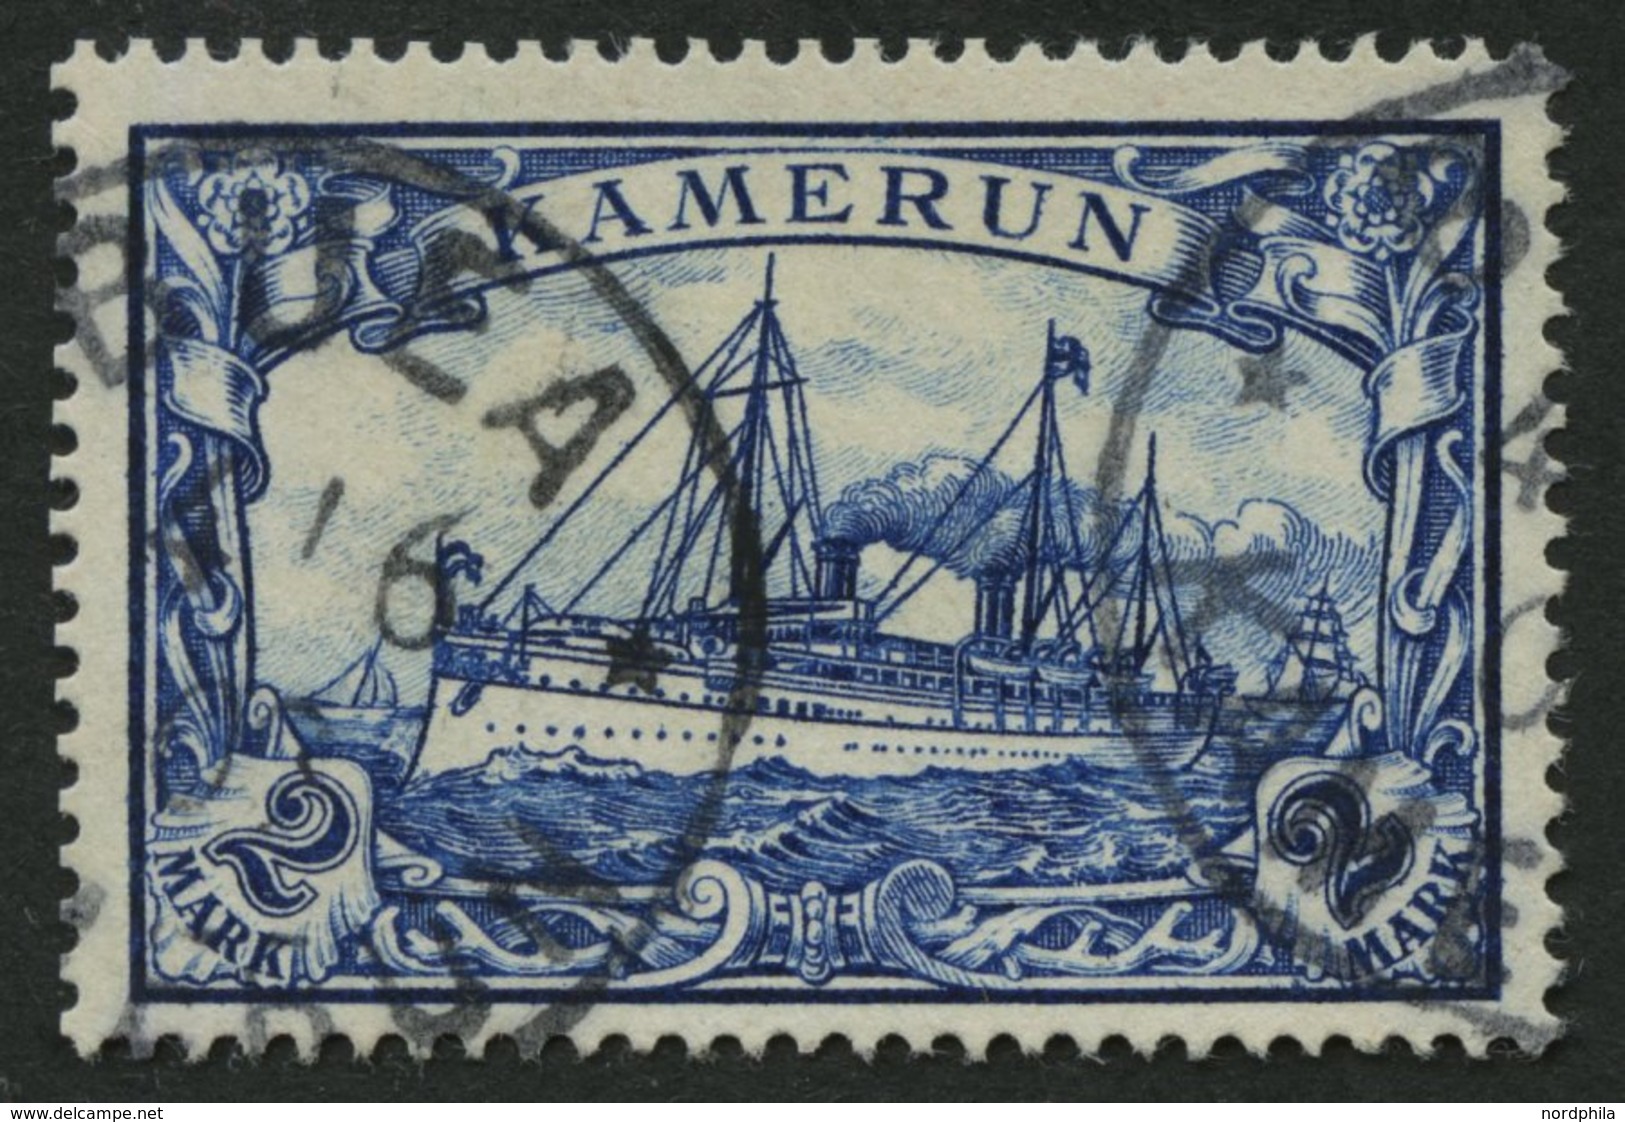 KAMERUN 17 O, 1900, 2 M. Schwärzlichblau, Pracht, Mi. 90.- - Camerun